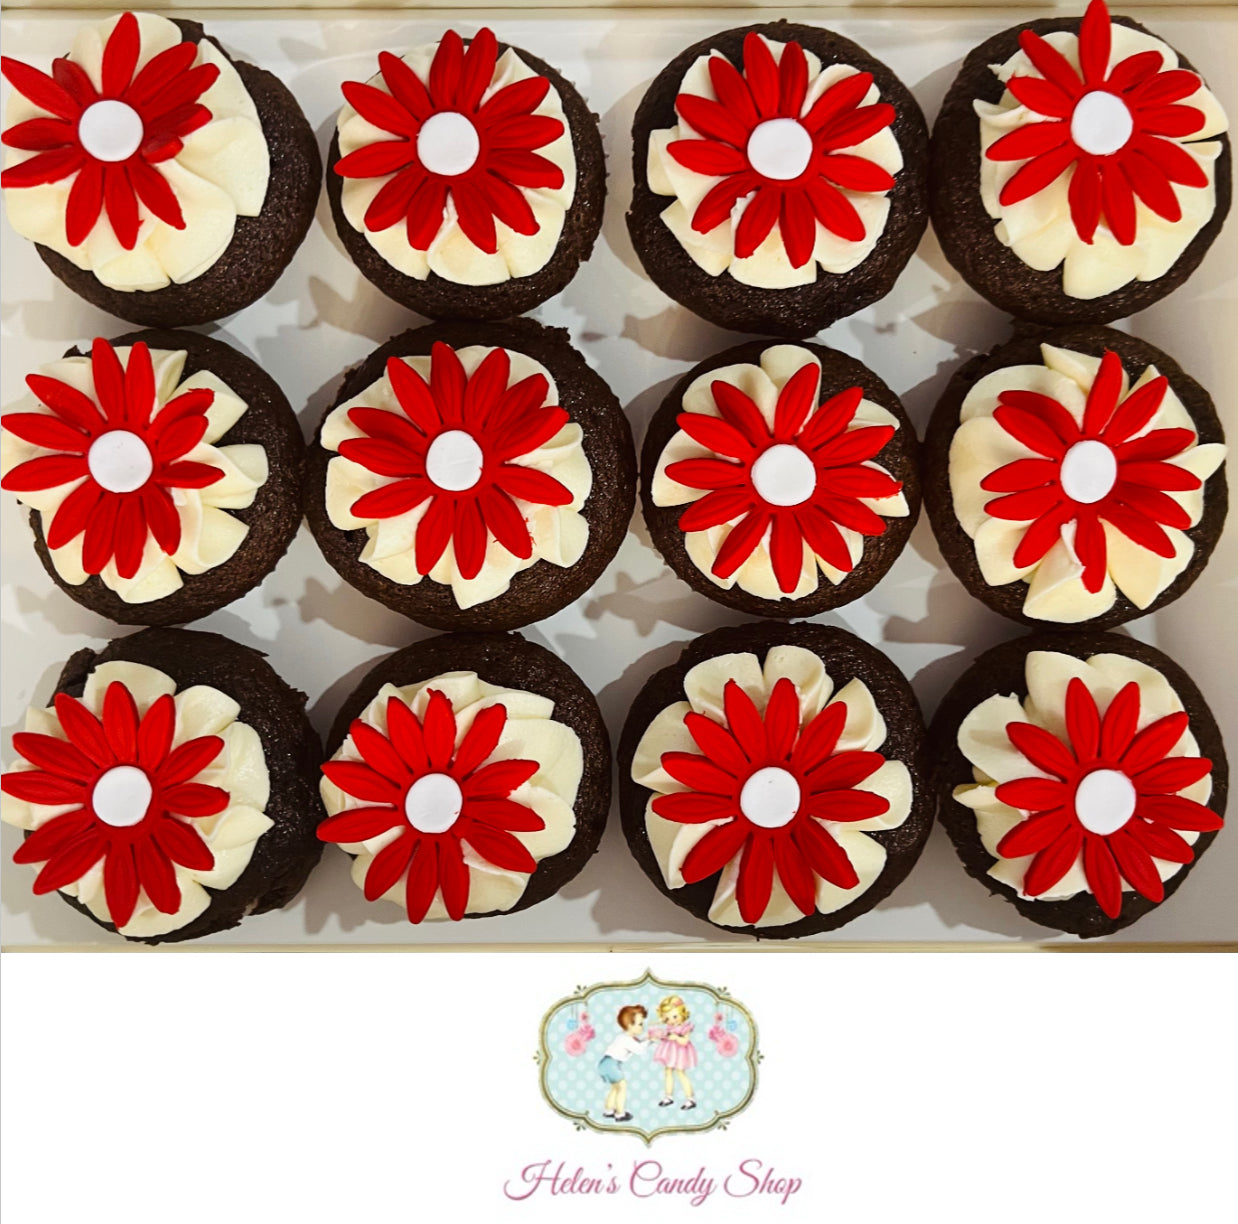 Cupcake Soft Bra - Red - – BB Store